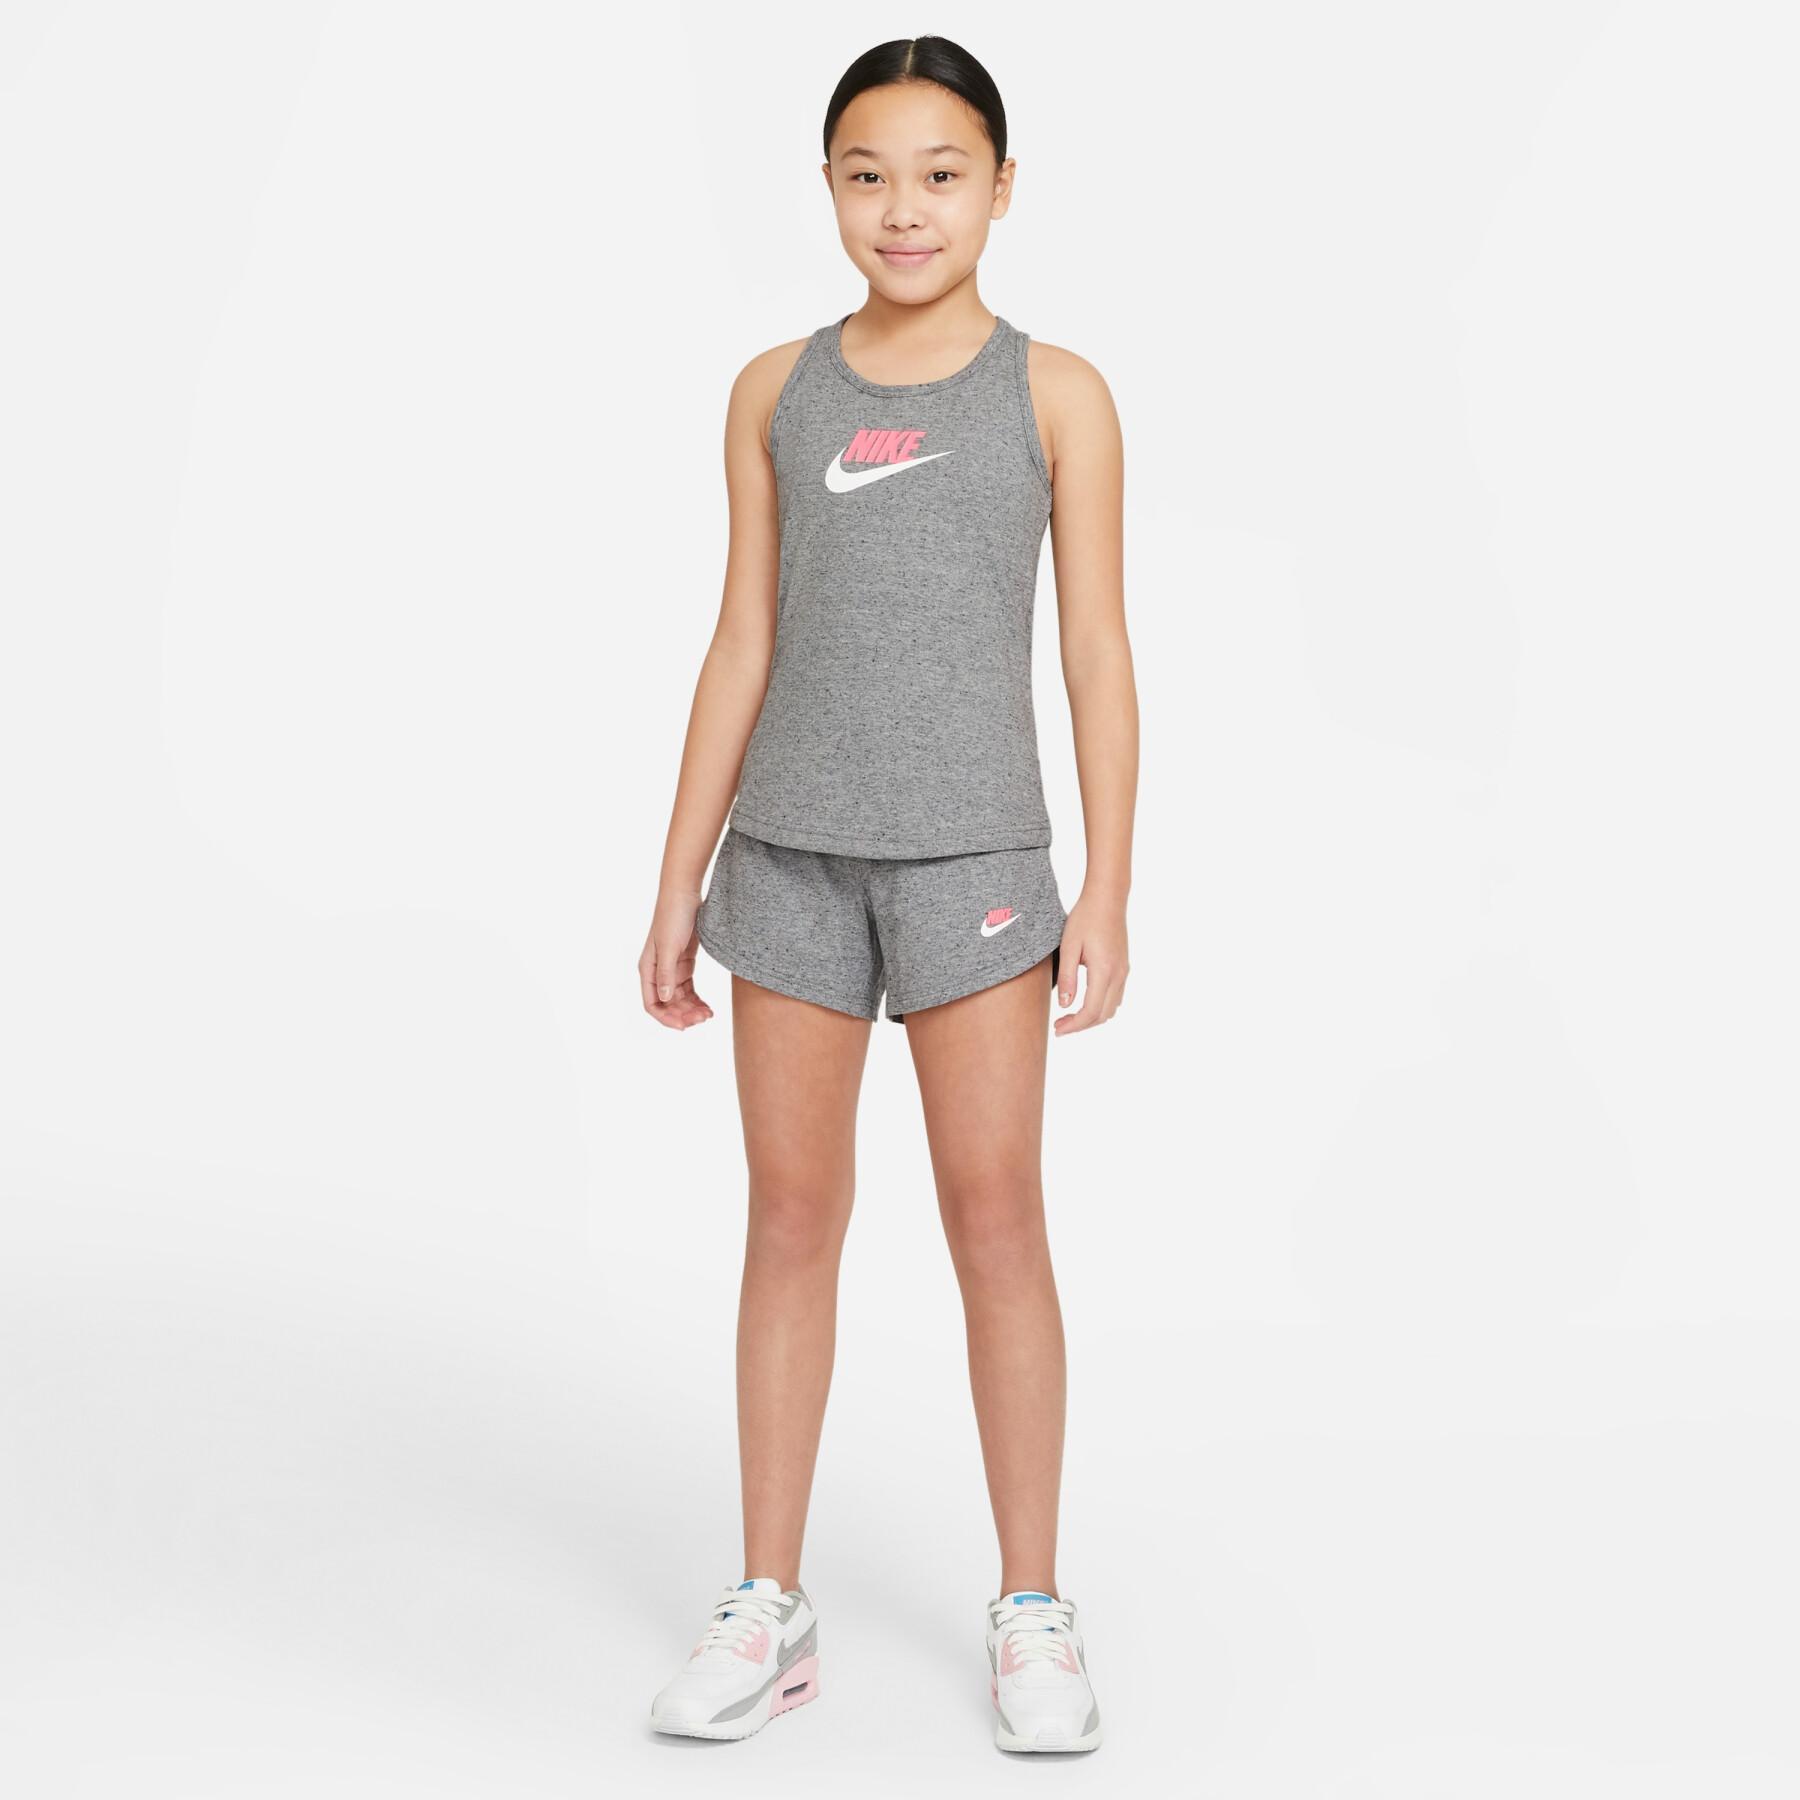 Calções para raparigas Nike Sportswear